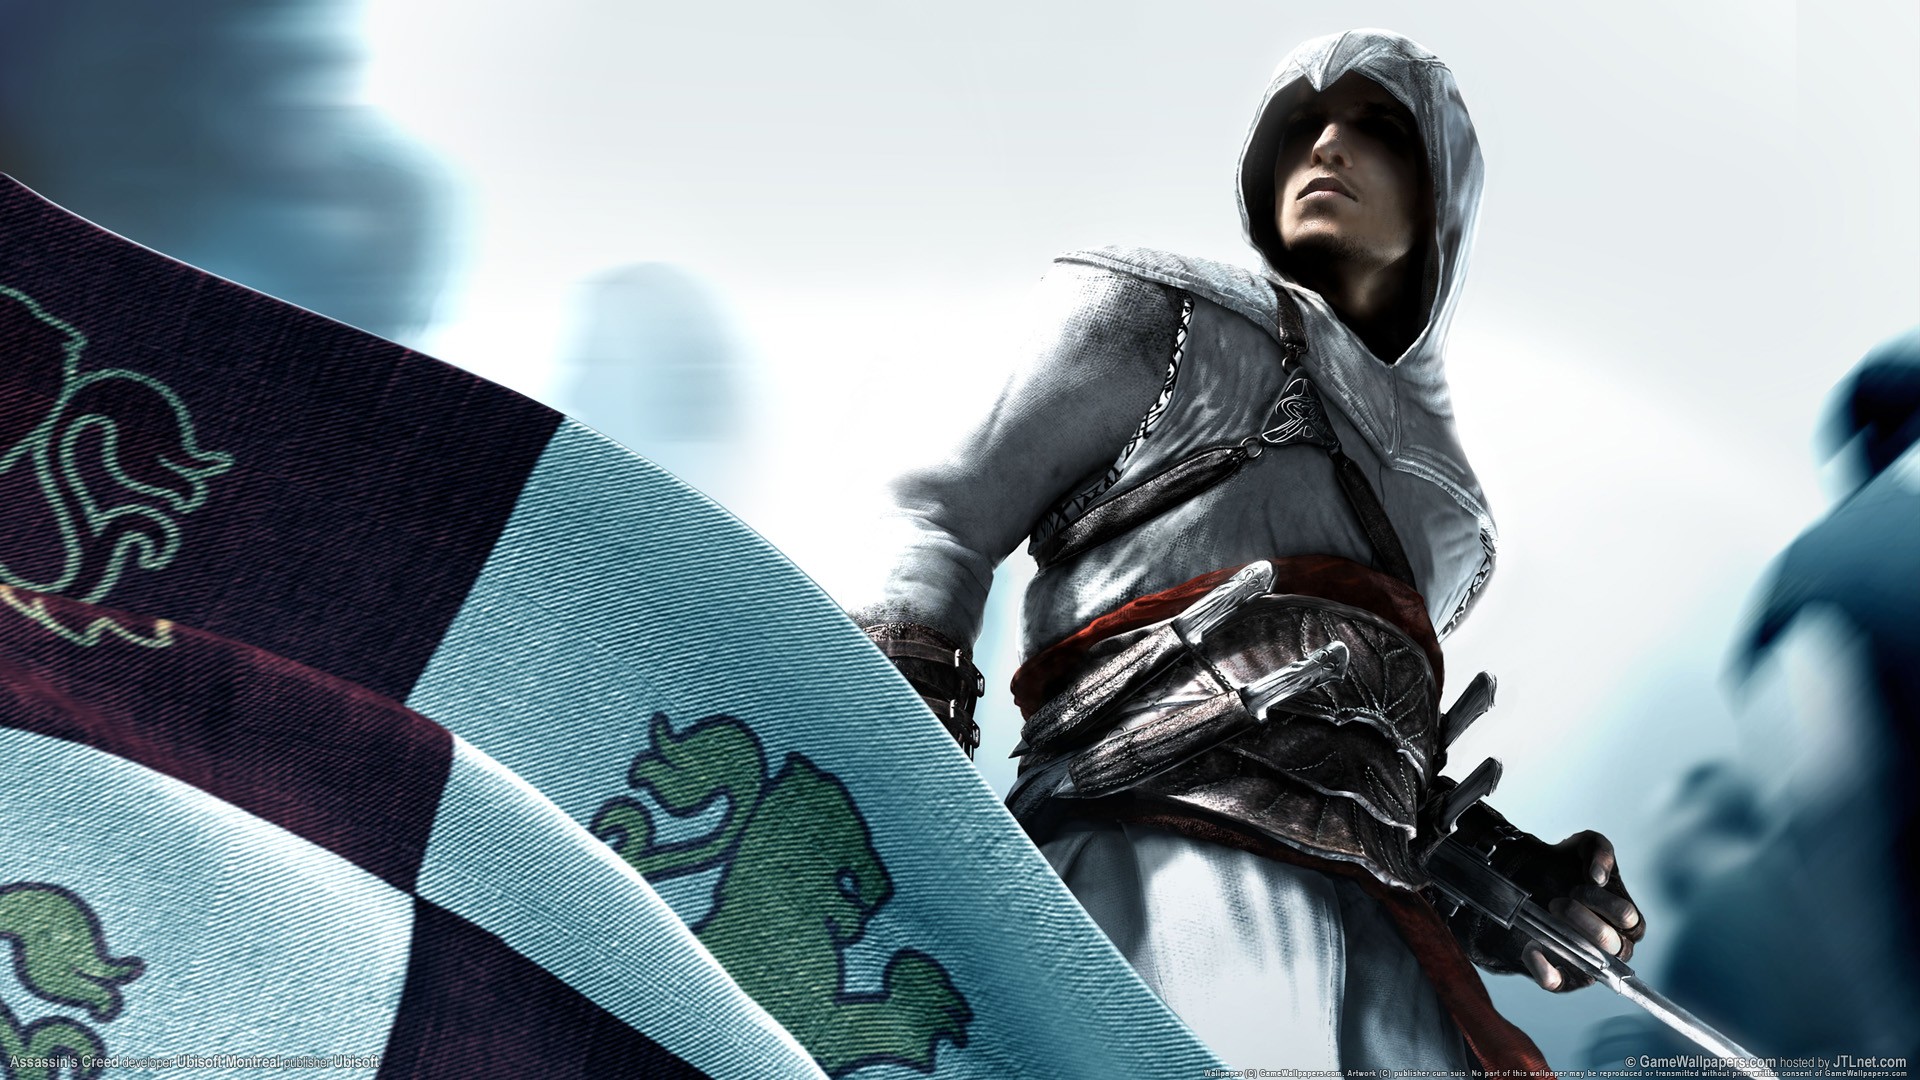 General 1920x1080 Assassin's Creed video games assassins  Altaïr Ibn-La'Ahad PC gaming hoods weapon video game art video game men Ubisoft